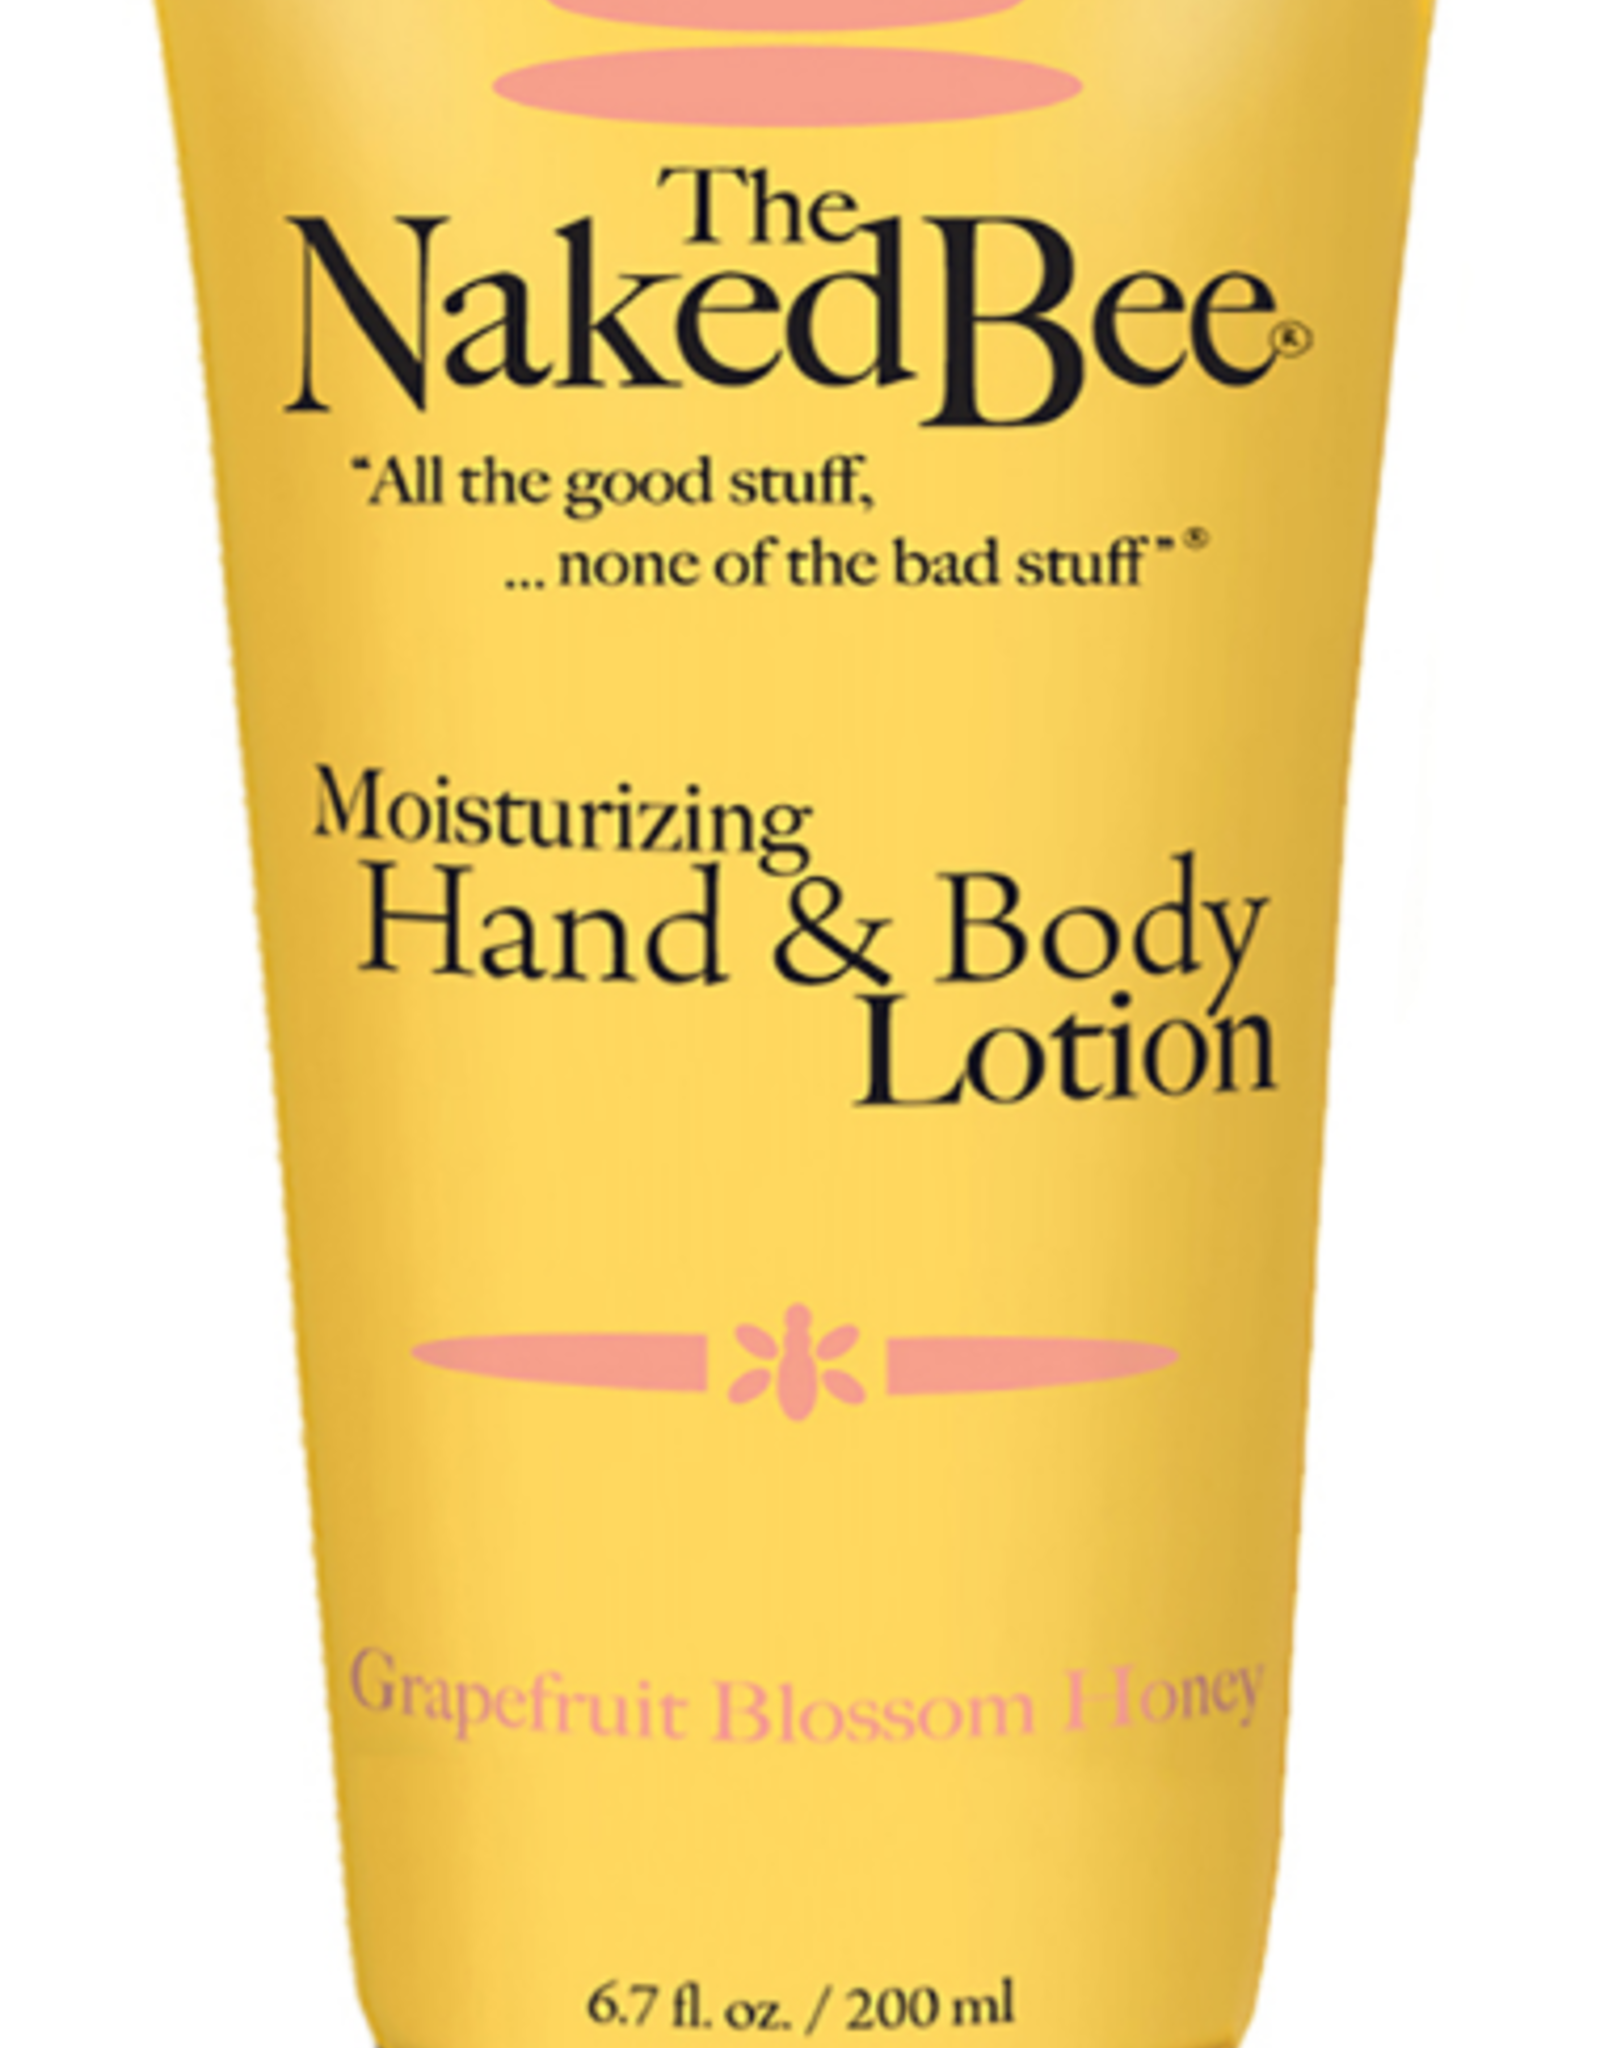 Naked Bee 6.7 oz. Grapefruit Blossom Honey Hand & Body Lotion